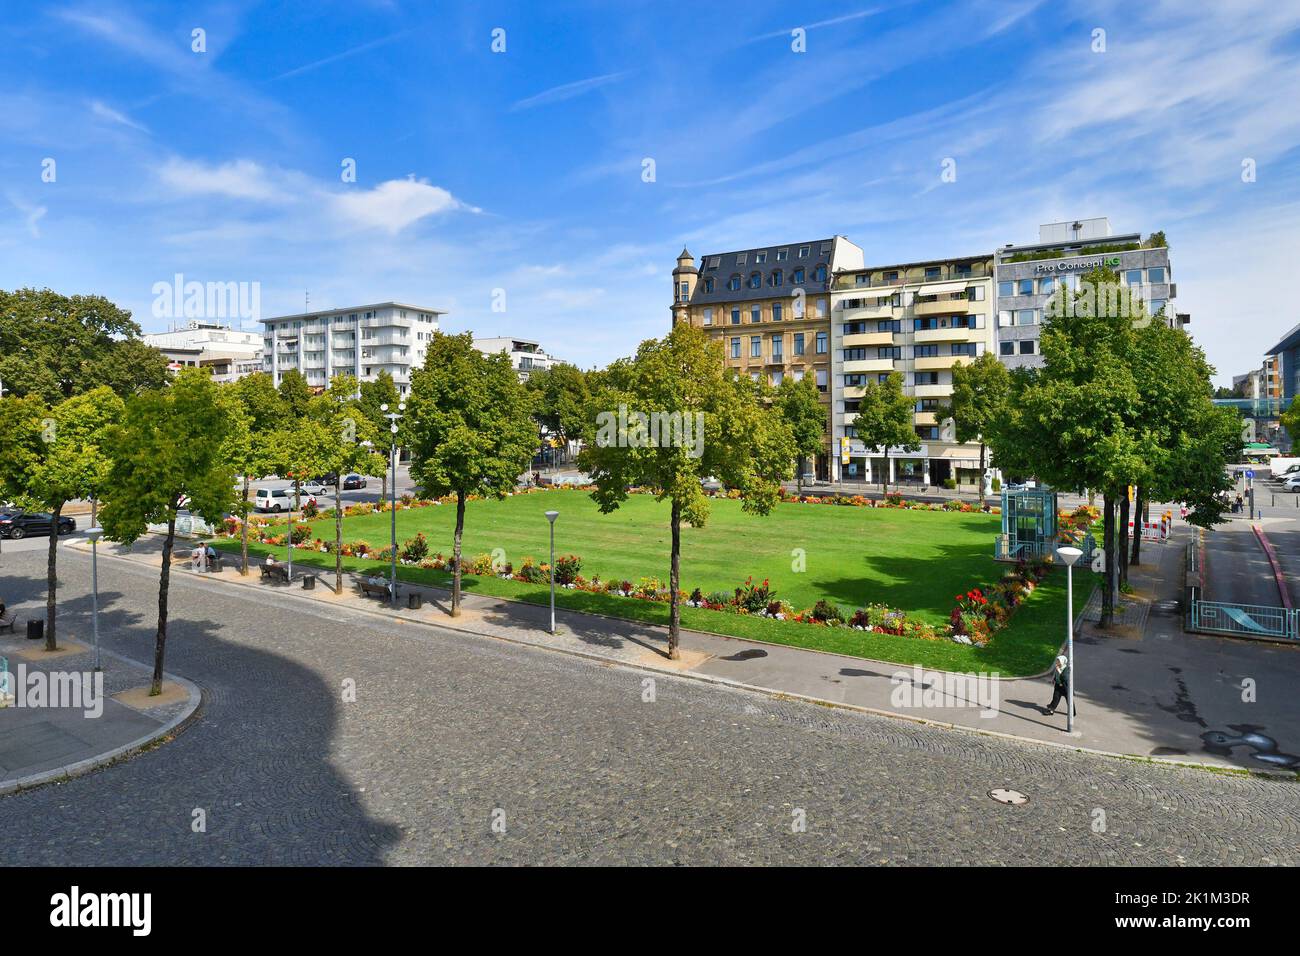 Mannheim, Germany - September 2022: Part of public park called 'Friedrichsplatz' in Mannheim city center on sunny day Stock Photo